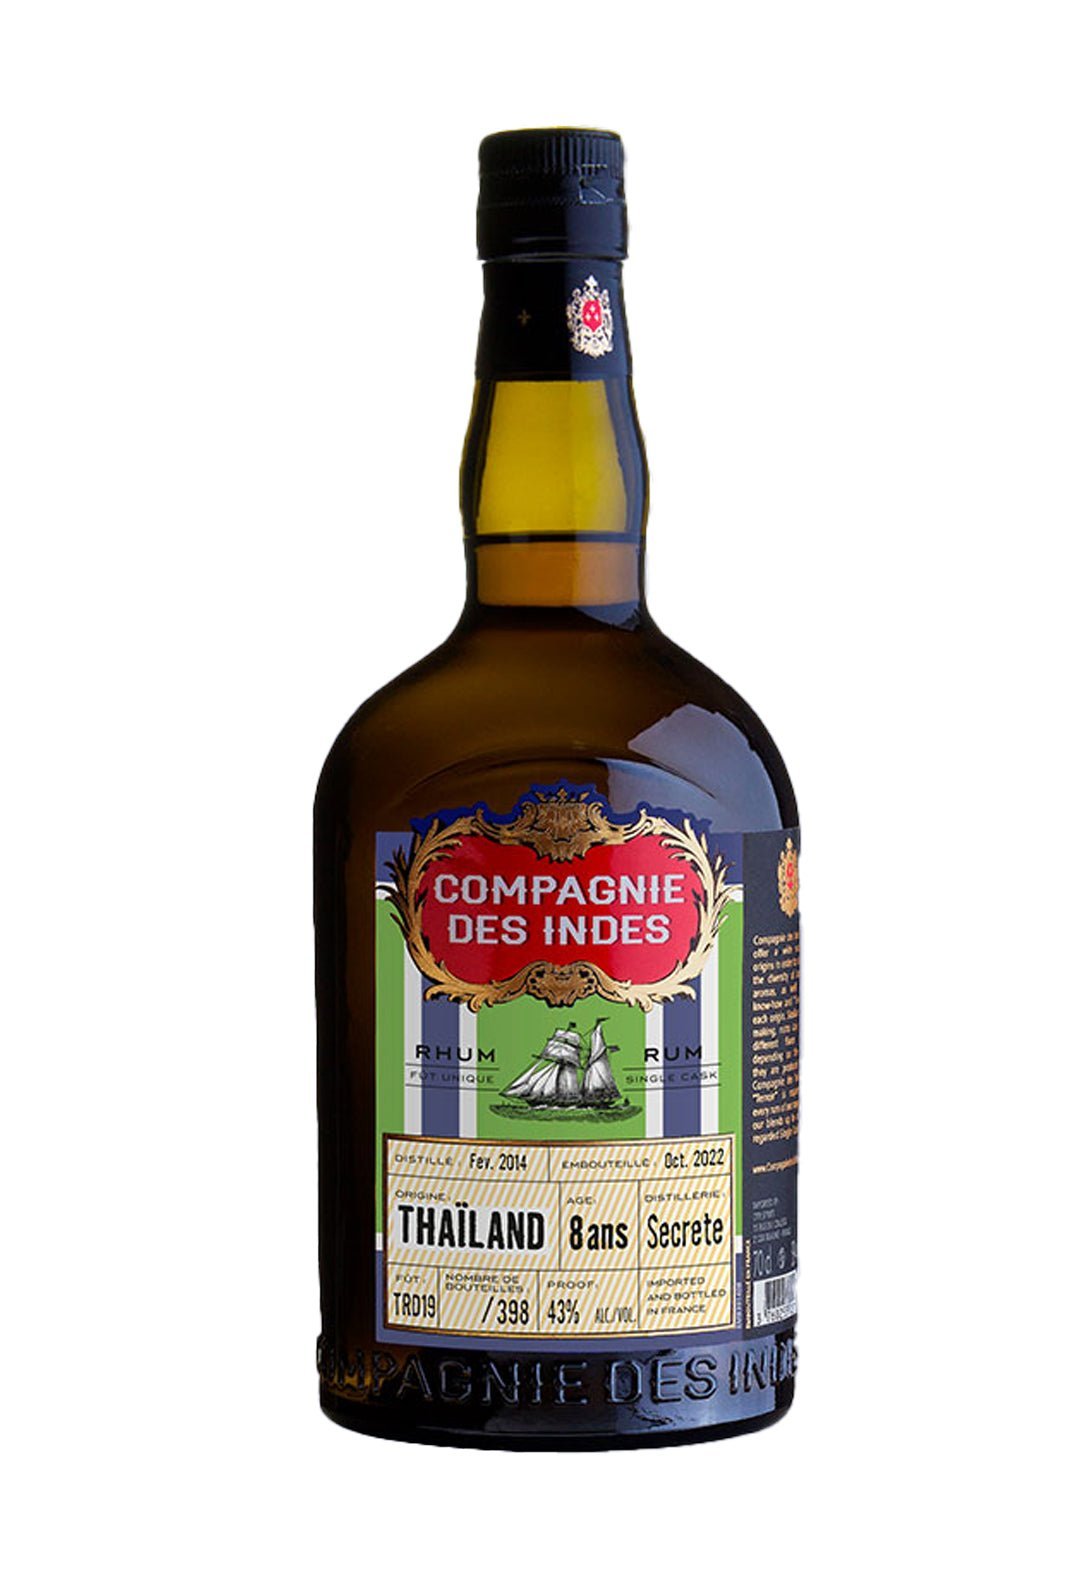 Compagnie des Indes 8 years Rum Thailand 43% 700ml | Rum | Shop online at Spirits of France